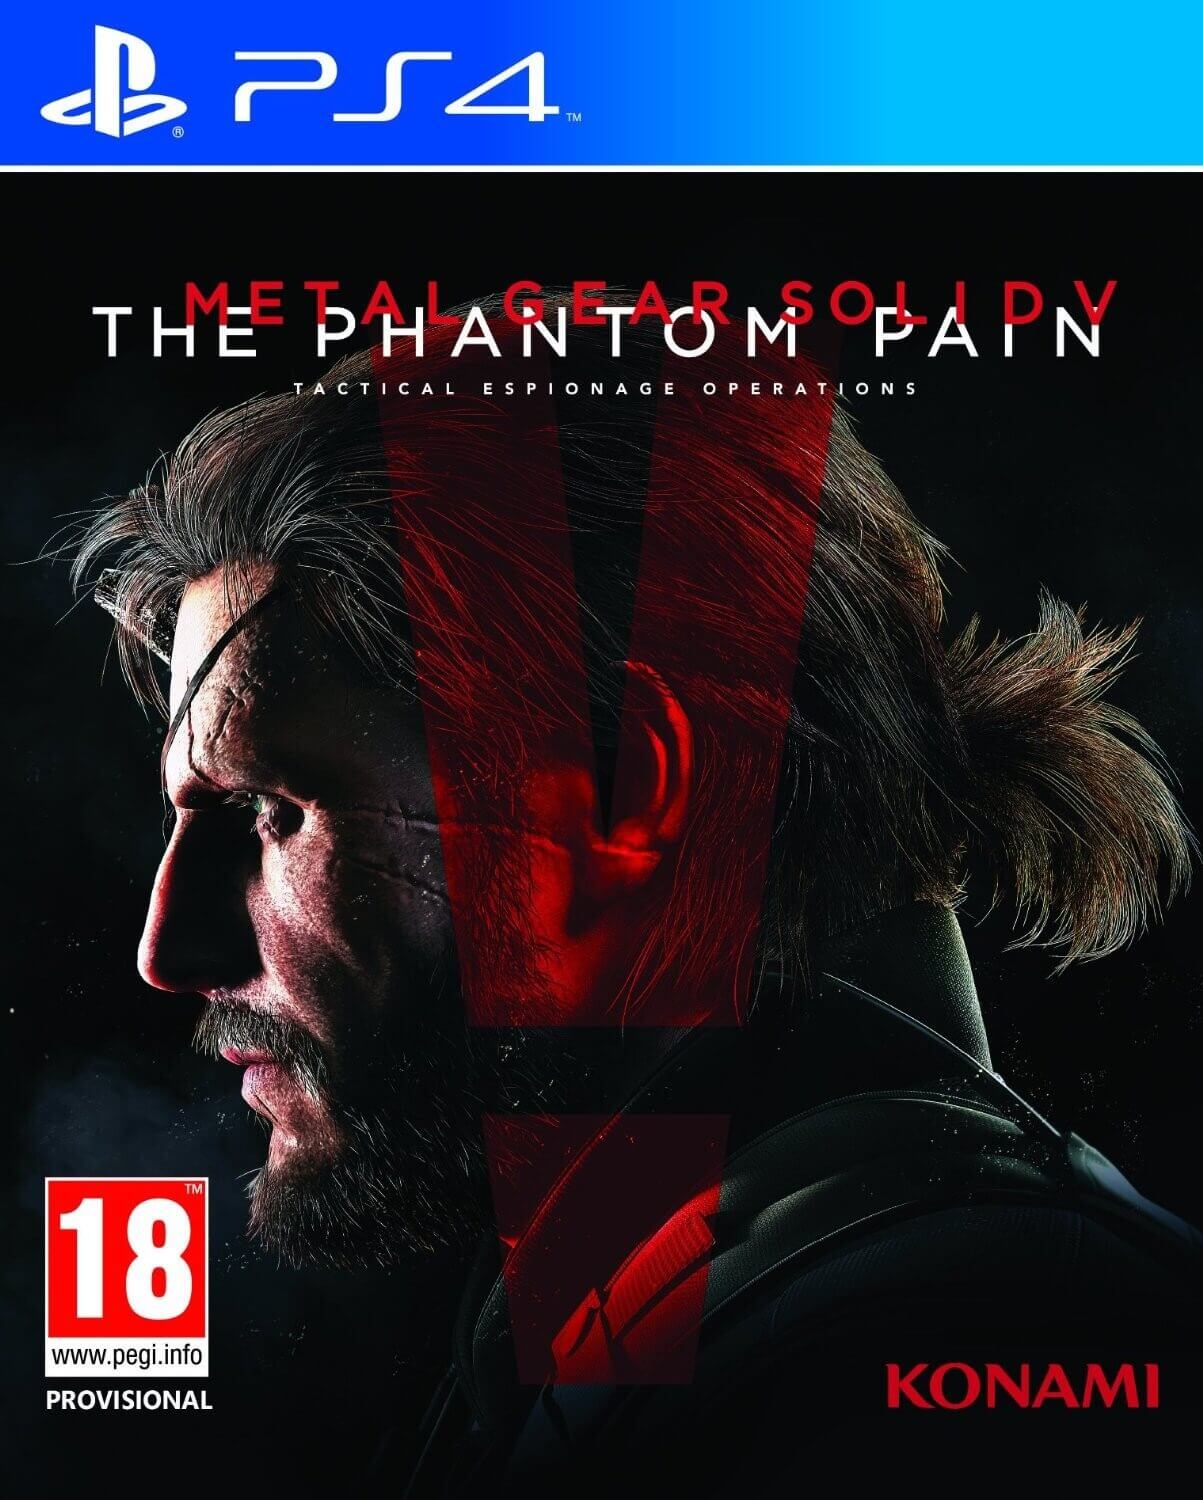 Metal Gear Solid V: The Phantom Pain PS4